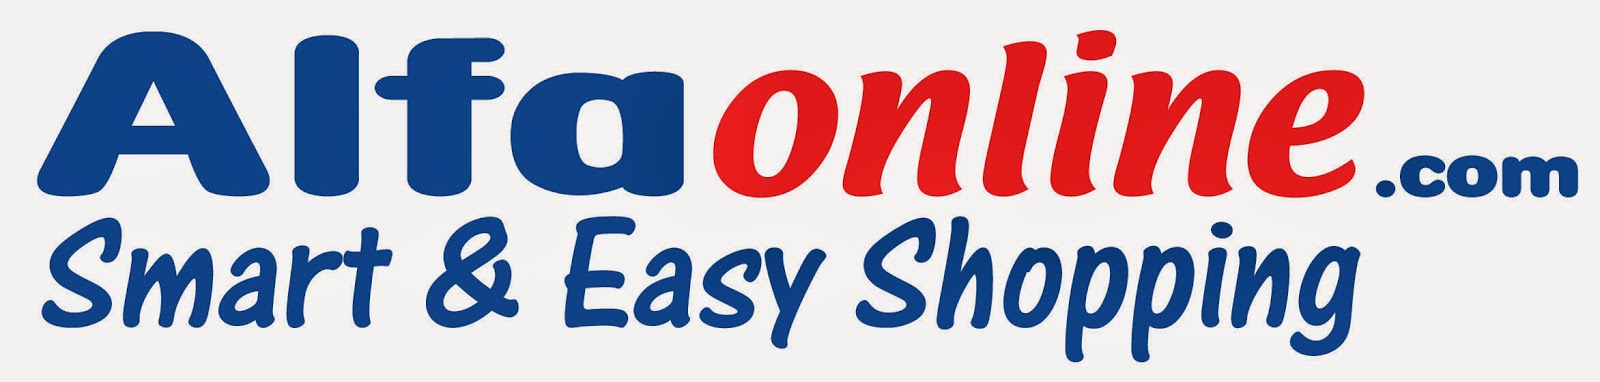 Магазин easy. Easy shop. Easily shop. Easy shopping. Easy shop logo.